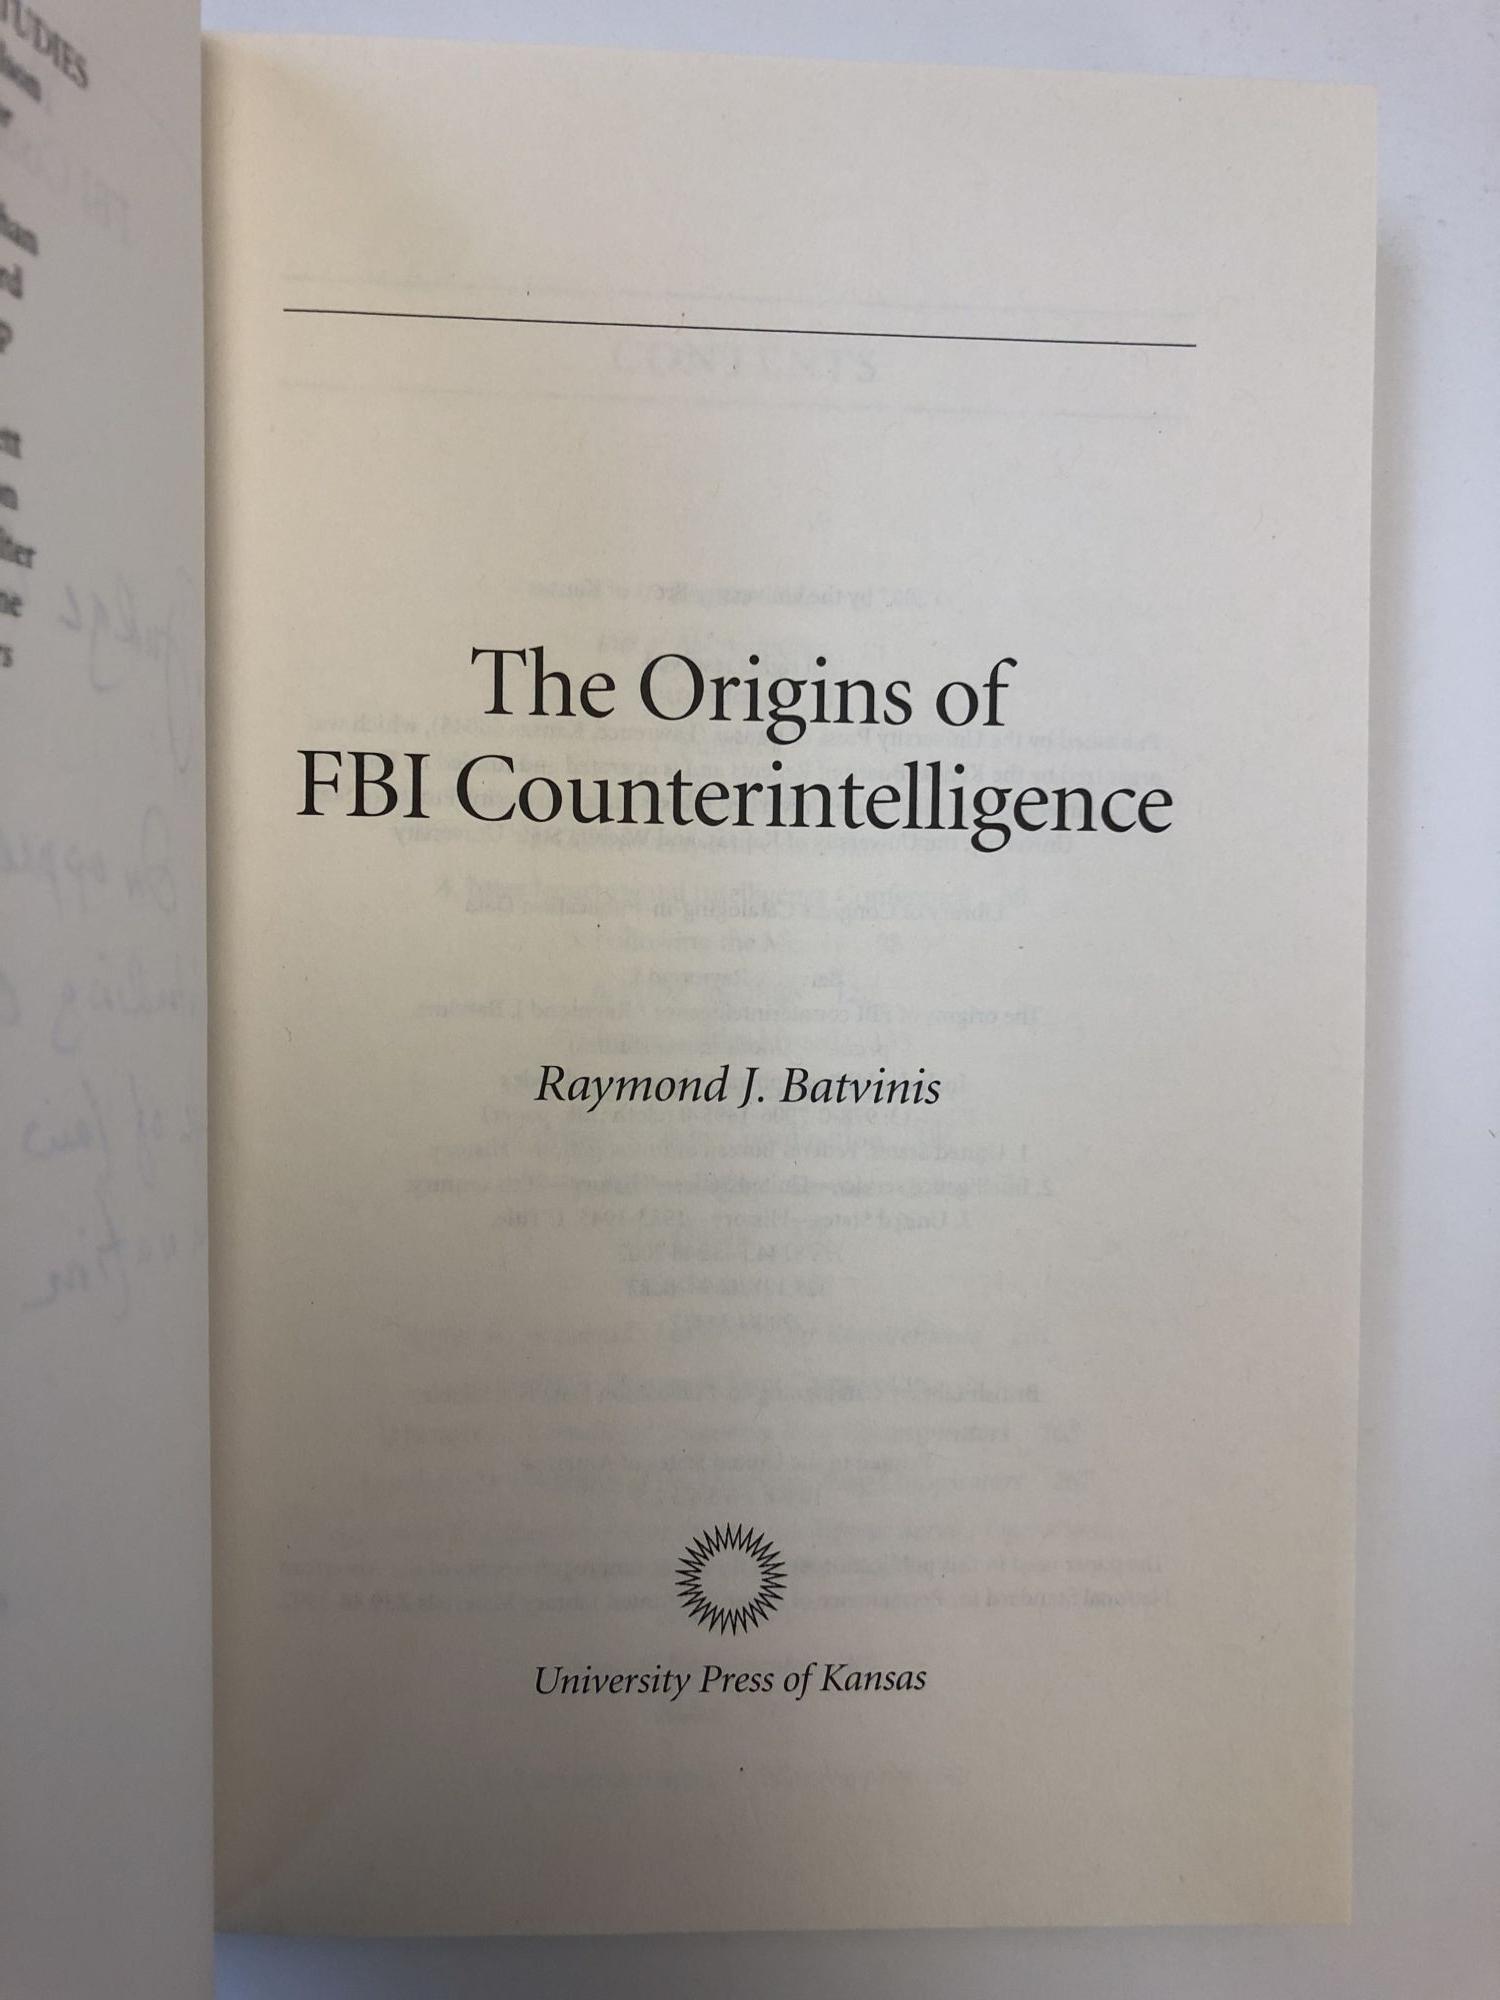 research books on fbi